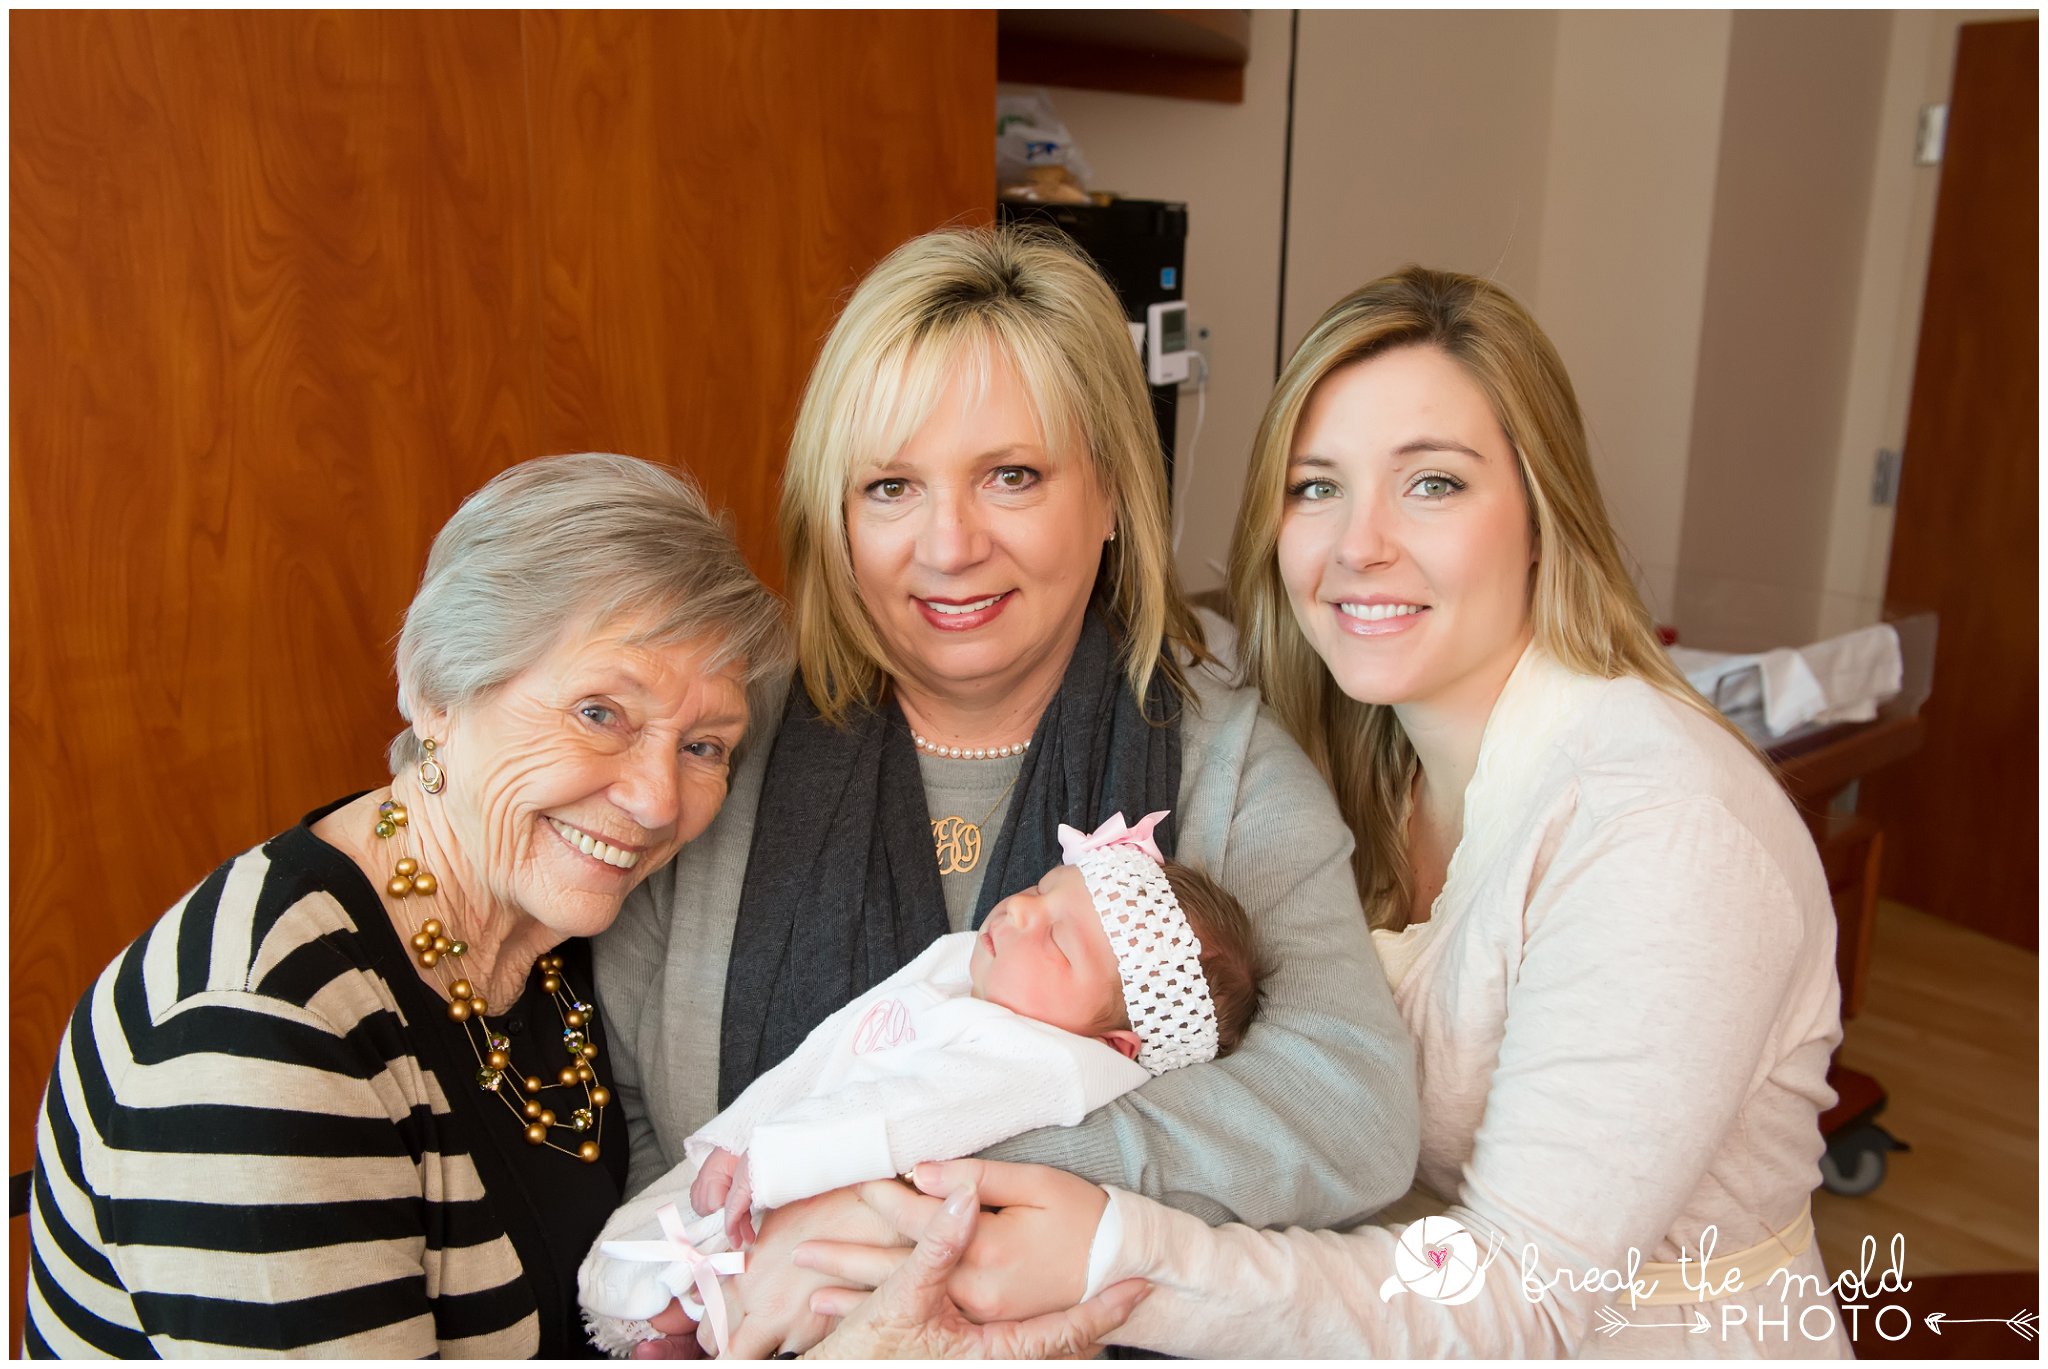 fresh-24-newborn-in-hospital-break-the-mold-photo-baby-girl-sweet-in-room-photos (33).jpg